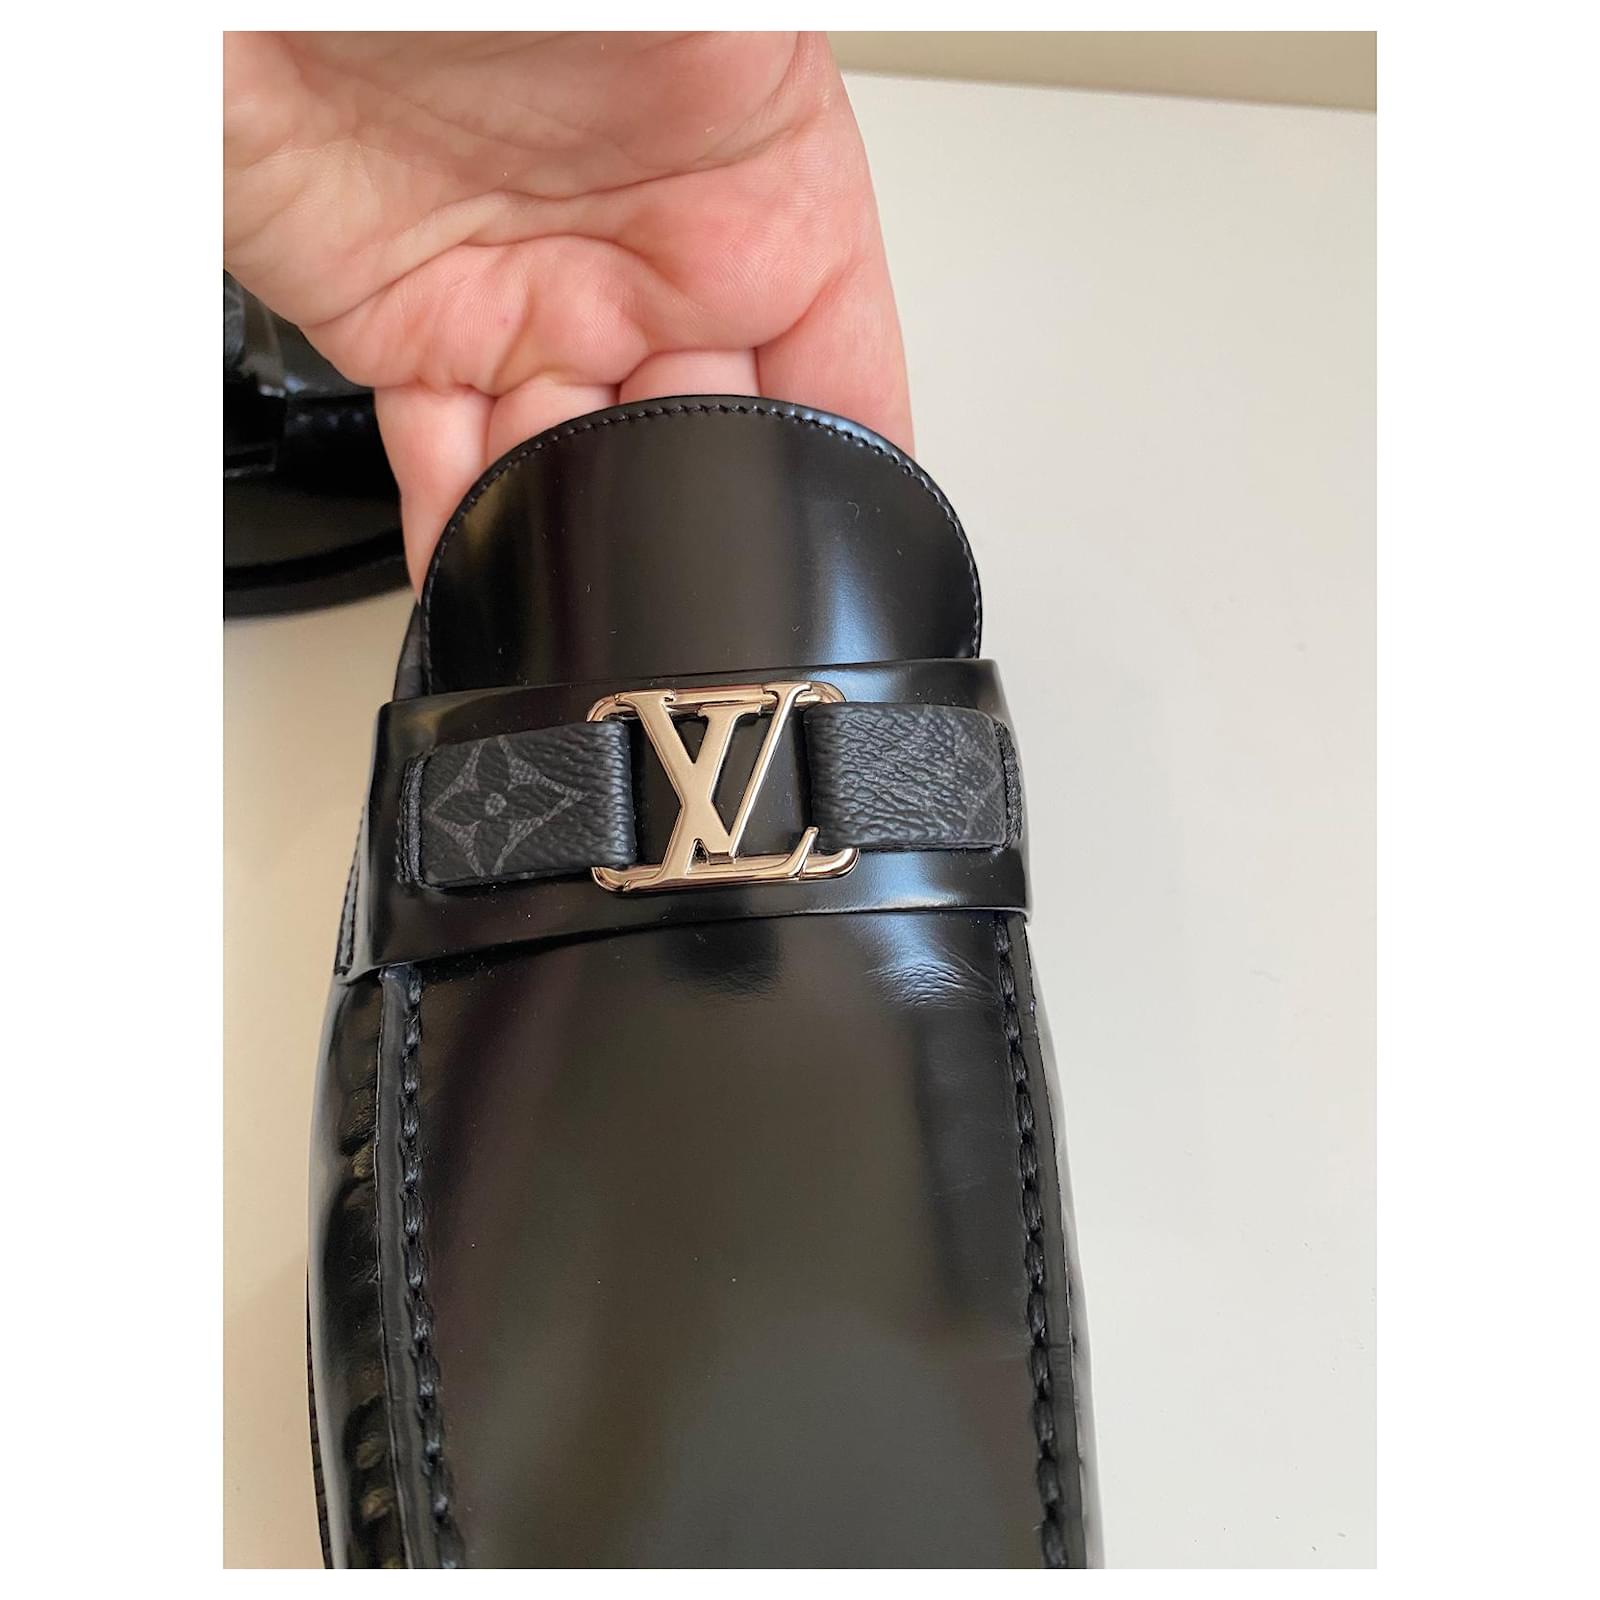 Louis Vuitton Men's Black Glazed Calf Leather Major Loafer